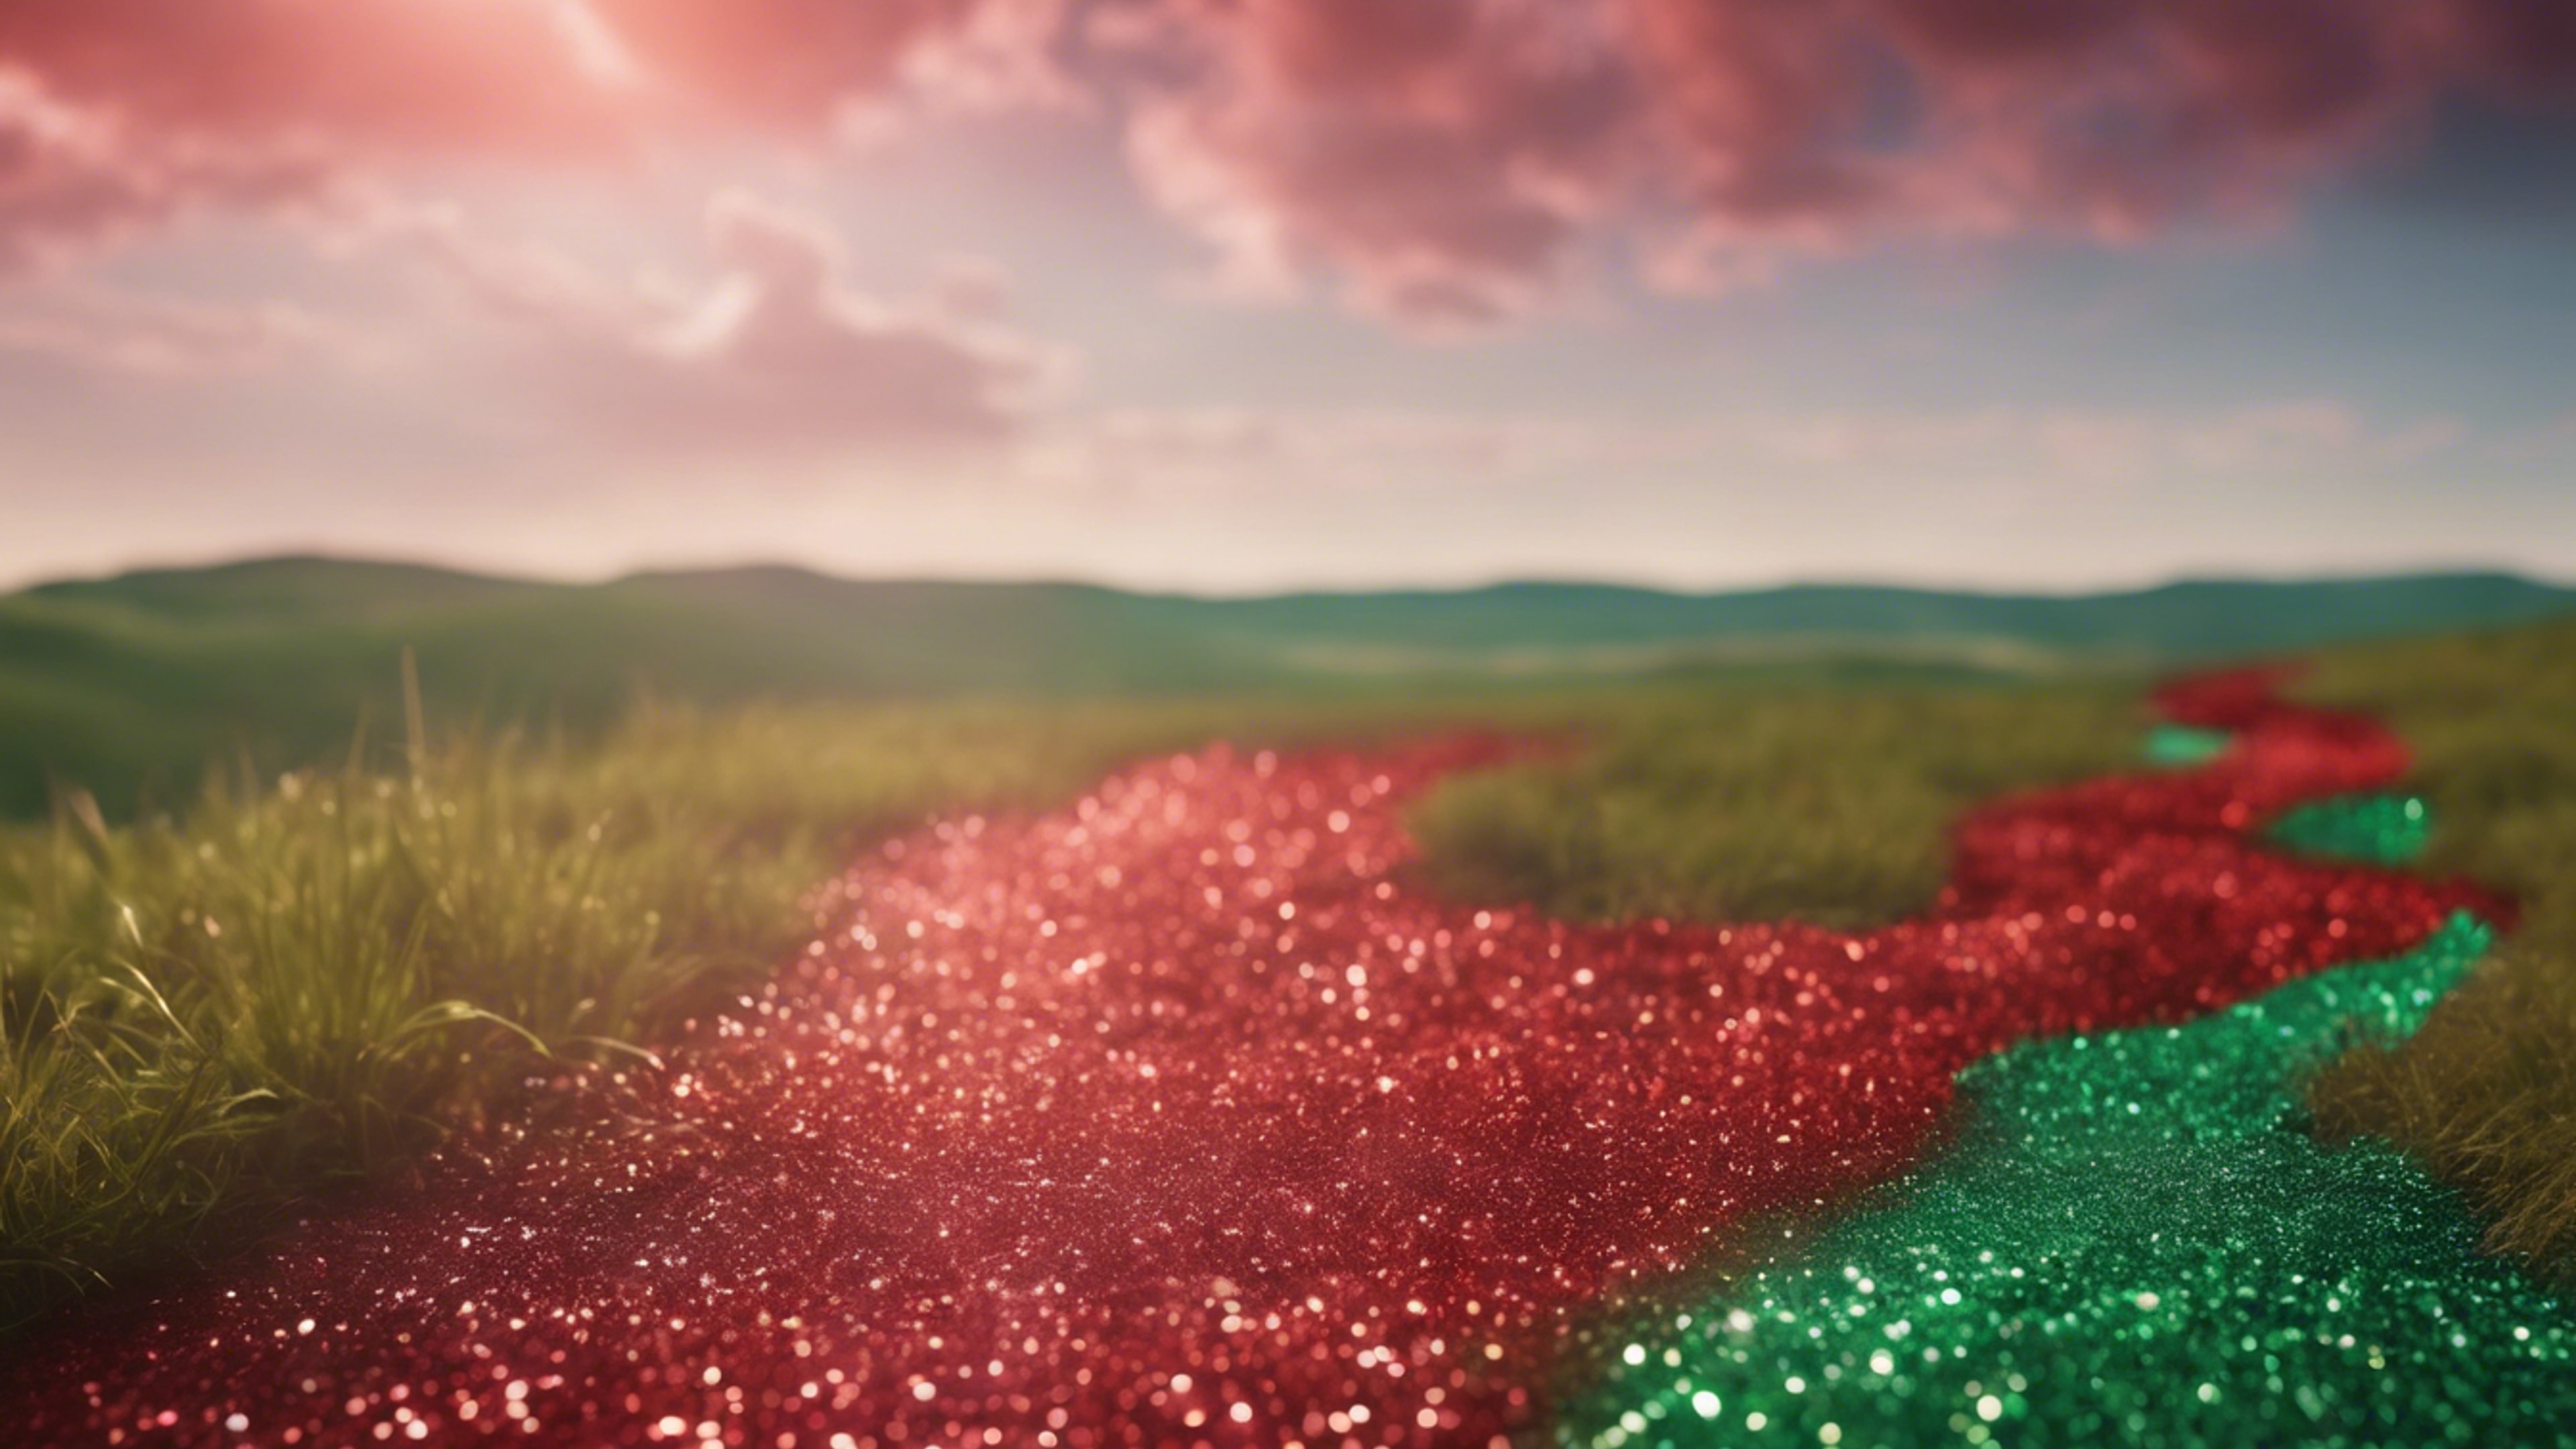 Path of shiny green and red glitter towards the horizon ផ្ទាំង​រូបភាព[4b670e6c3f1f43adb6d1]